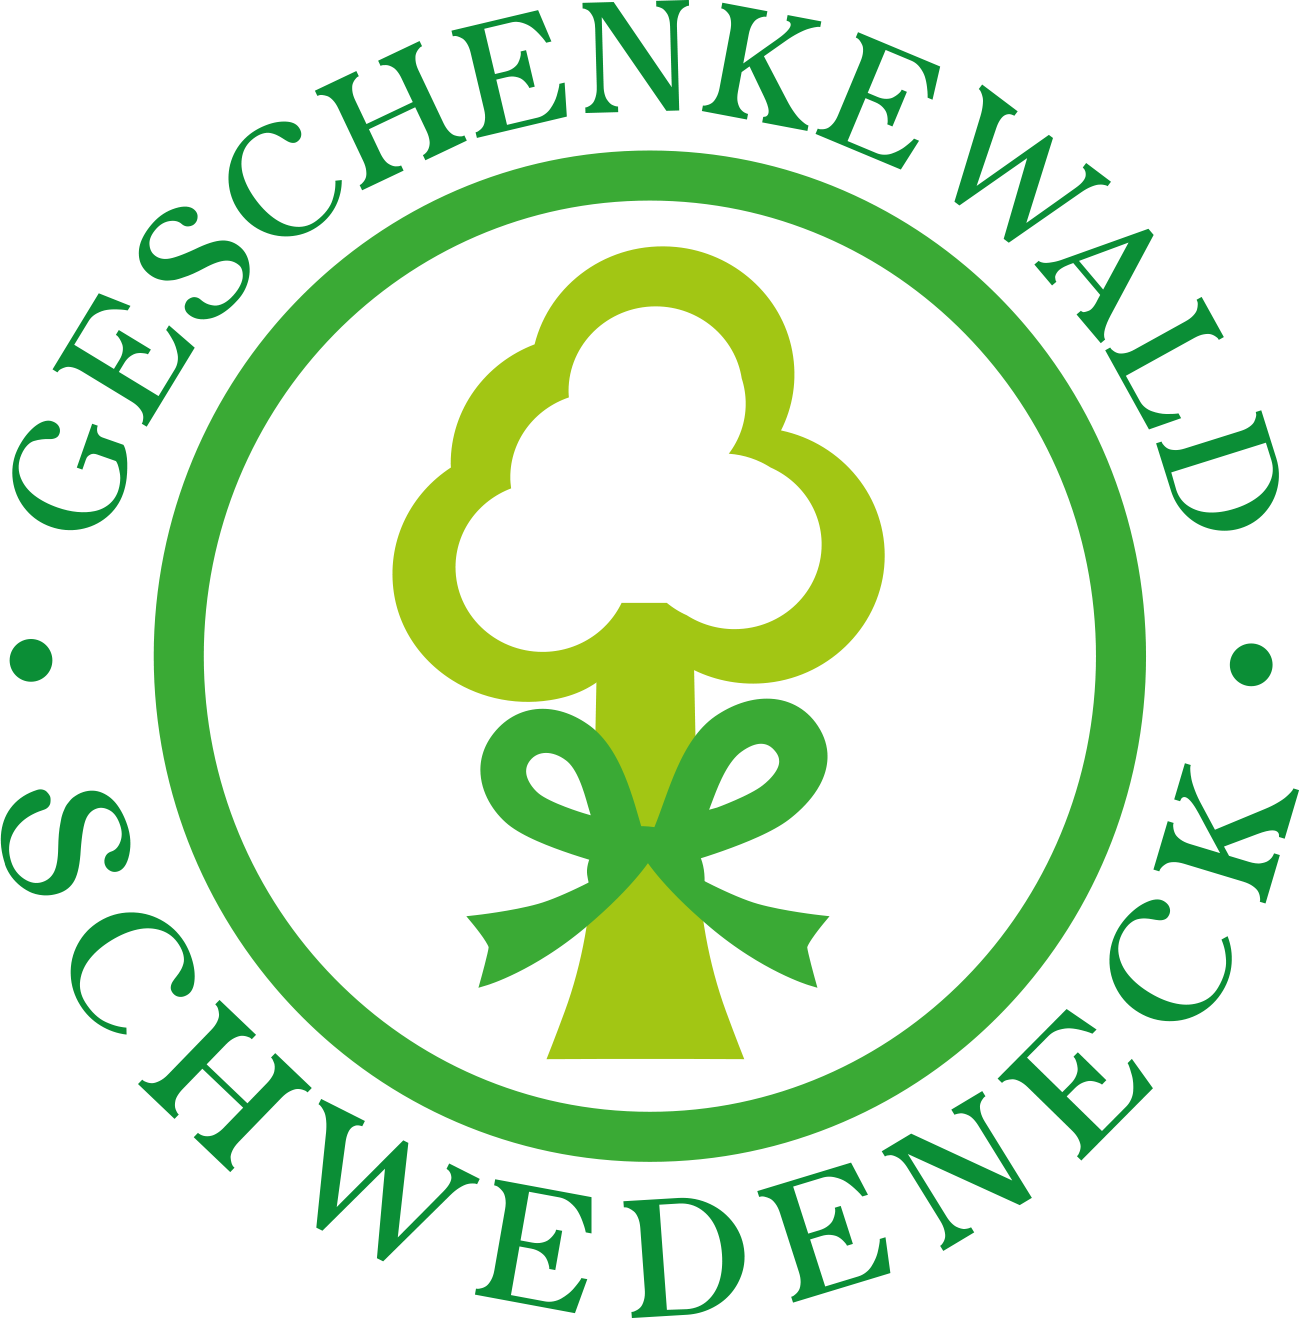 Geschenkewald Schwedeneck Logo